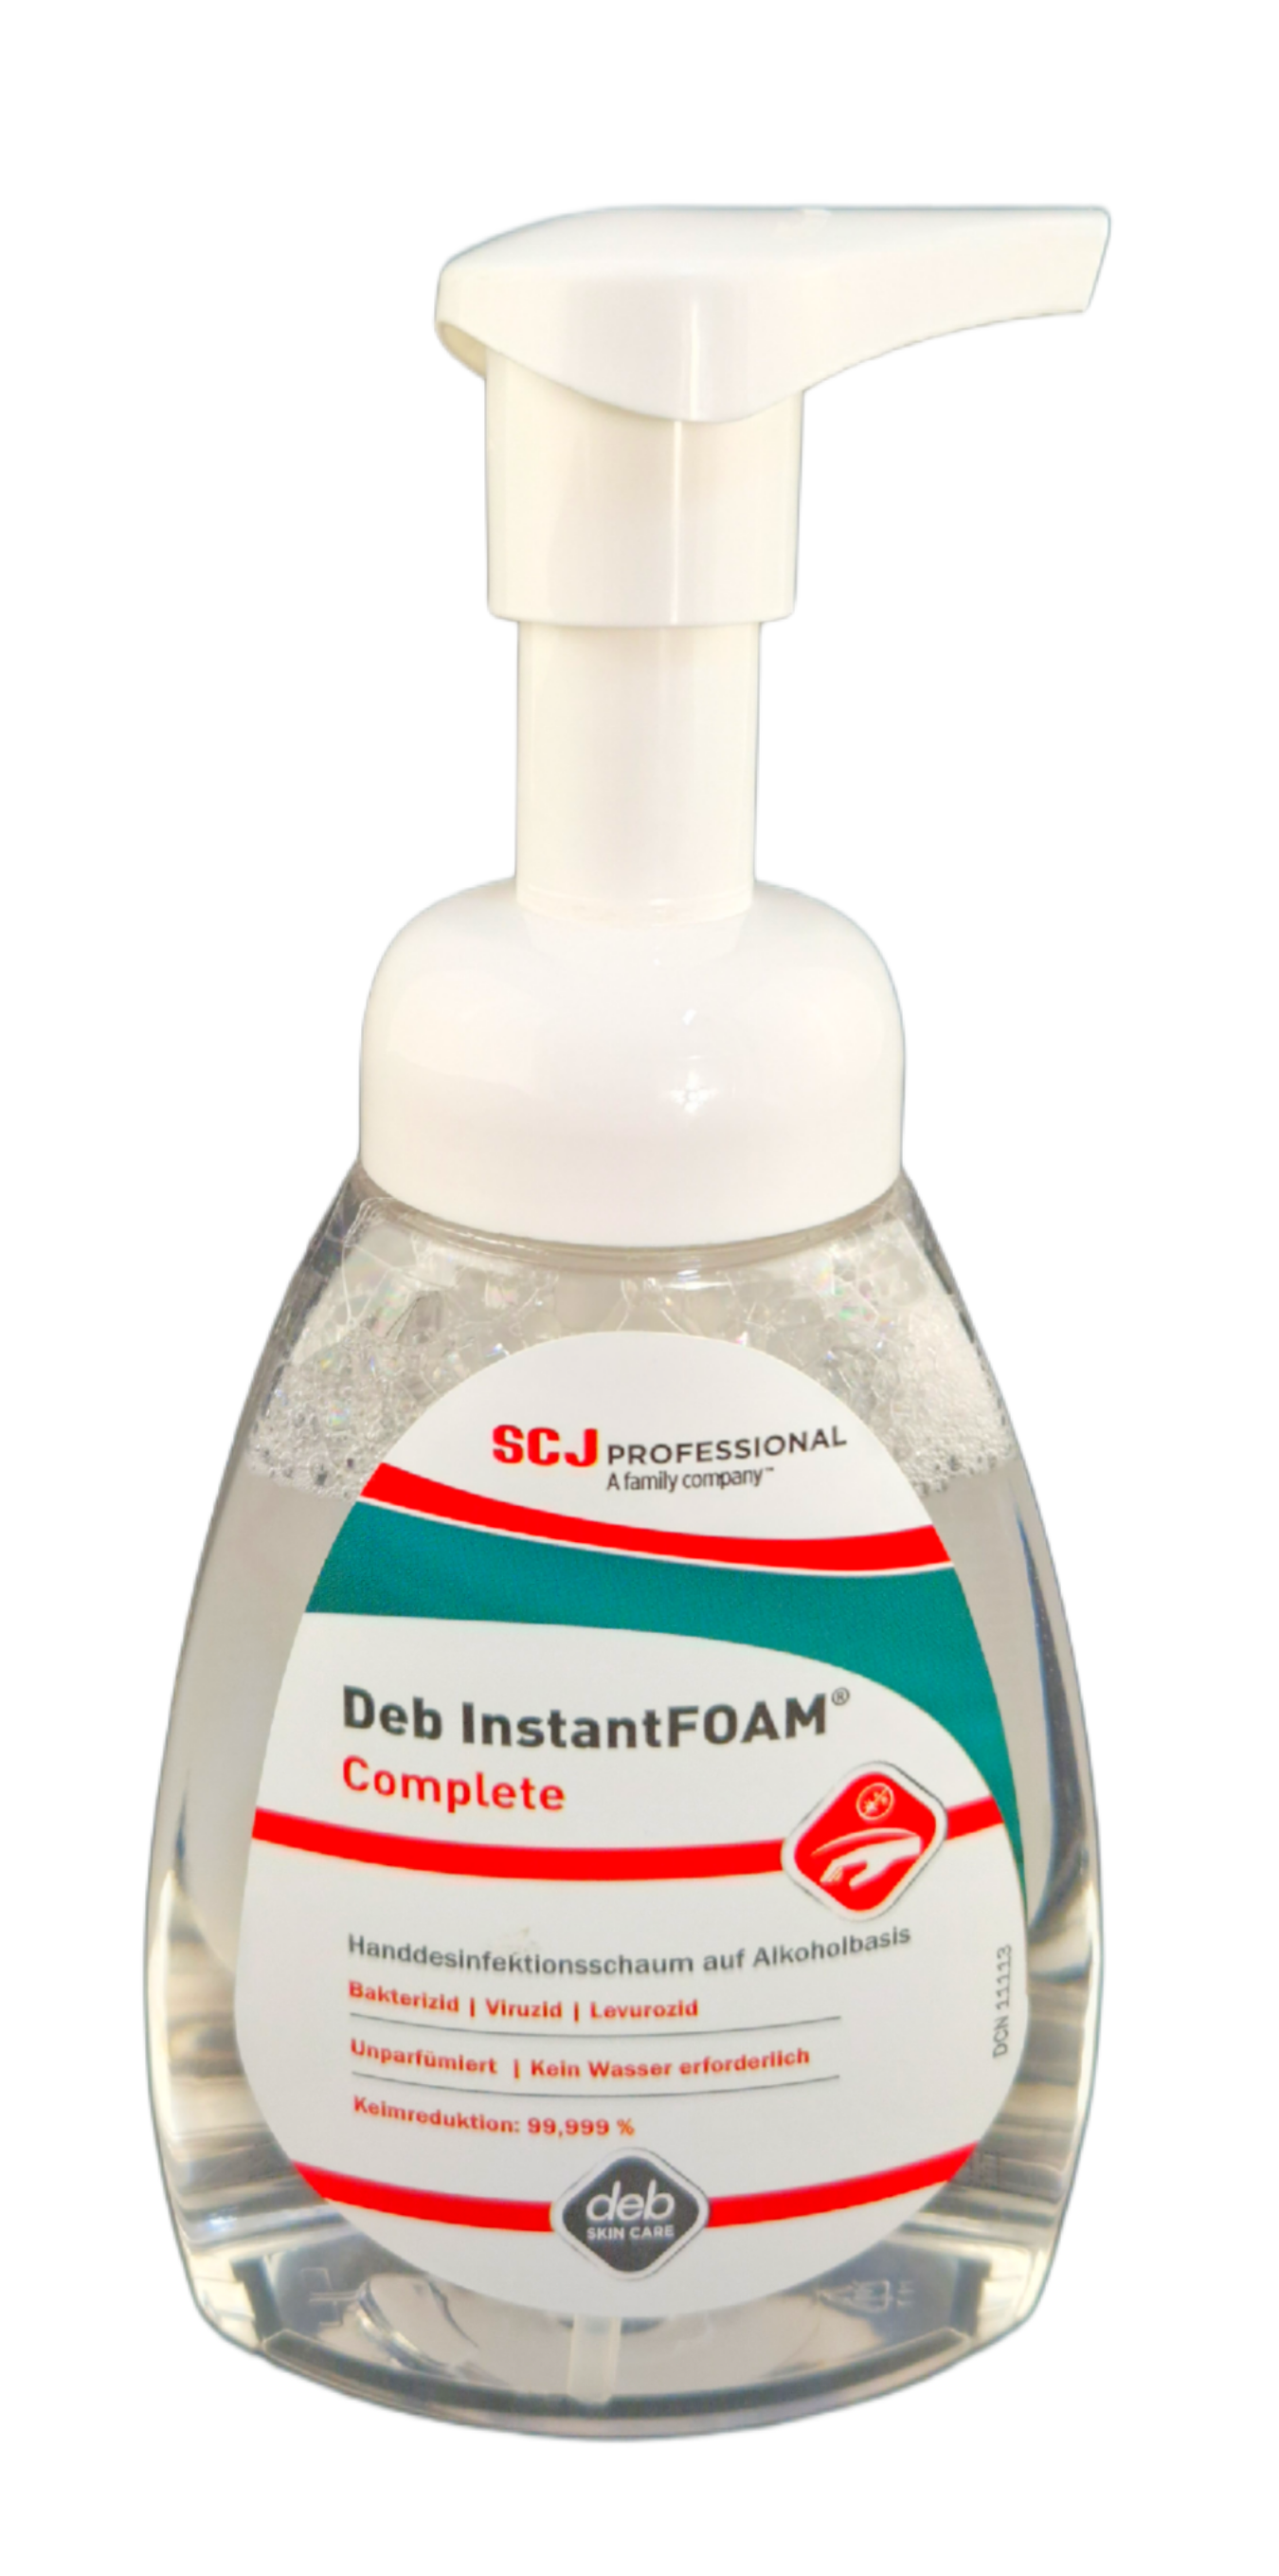 Deb Instant- FOAM® Complete 250 ml (ehemals Deb® InstantFOAM)